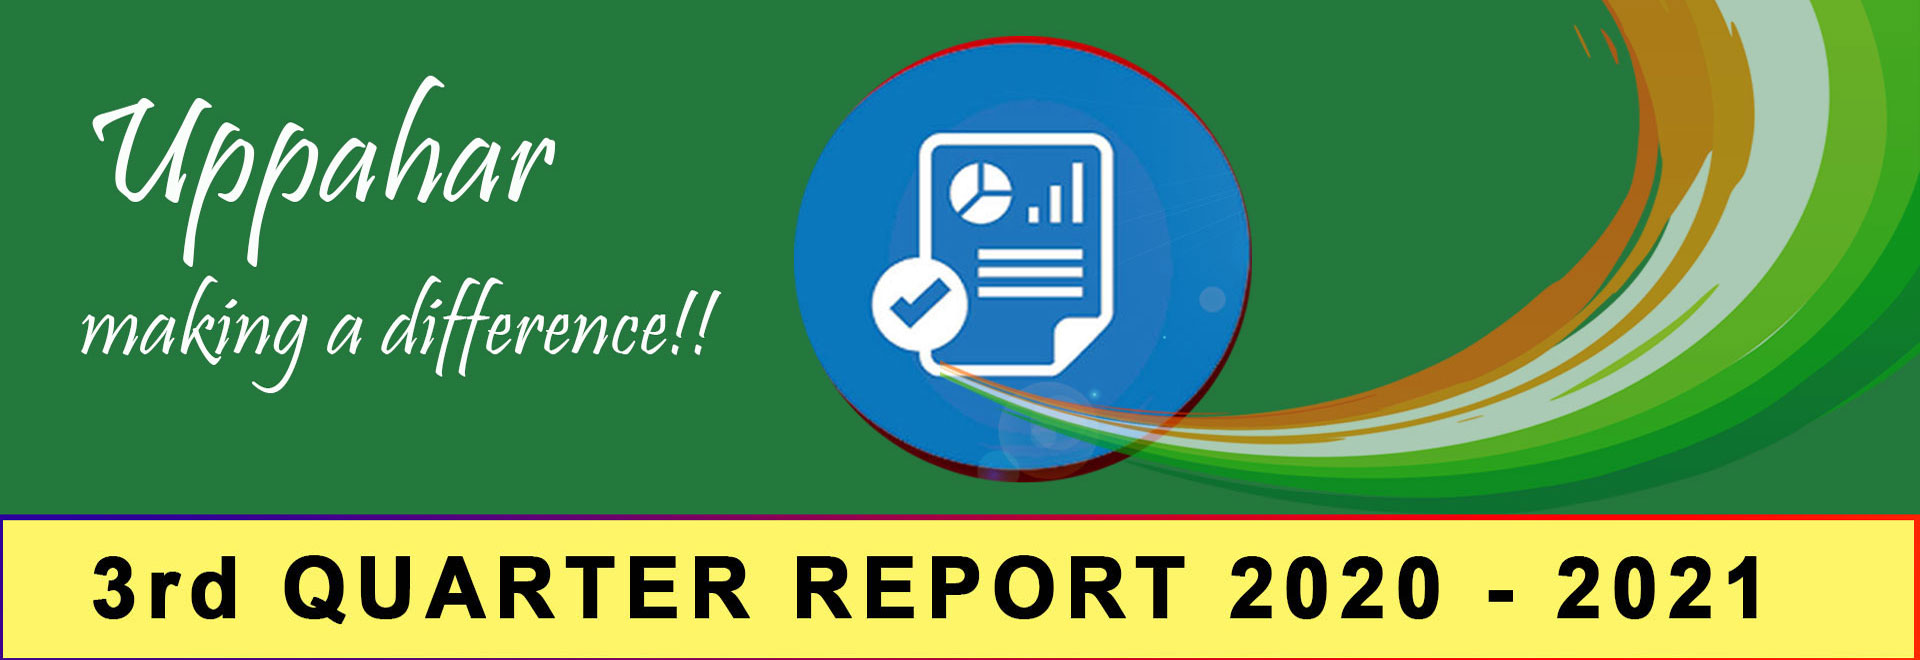 Uppahar India 3rd Quarterly Report 2020-2021